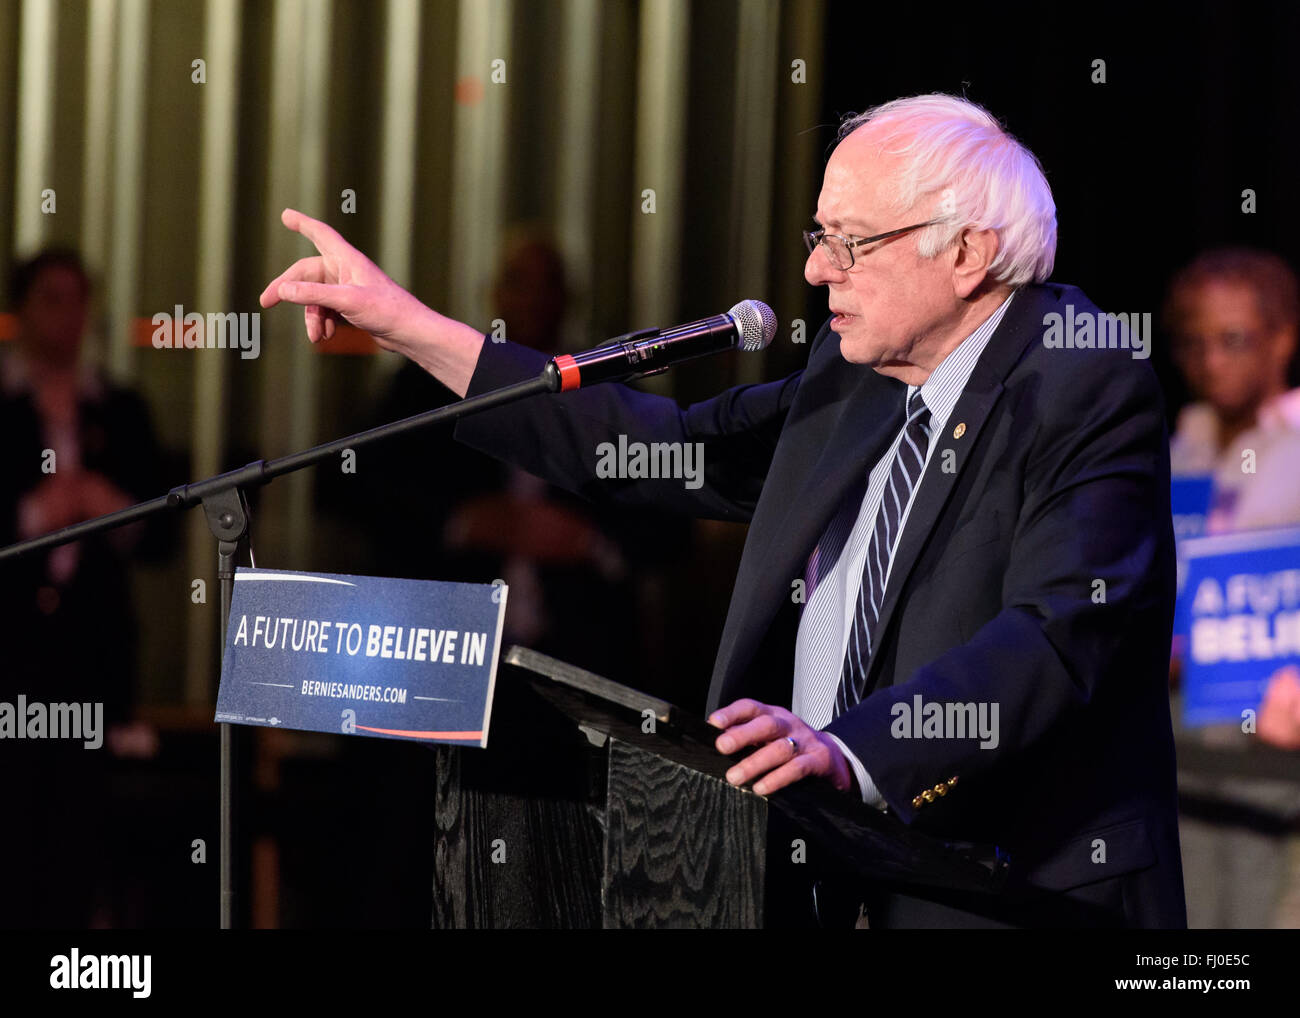 Columbia, South Carolina, USA. 26. Februar 2016. Präsidentschaftskandidat Bernie Sanders (D) hält eine politische Kundgebung. Stockfoto